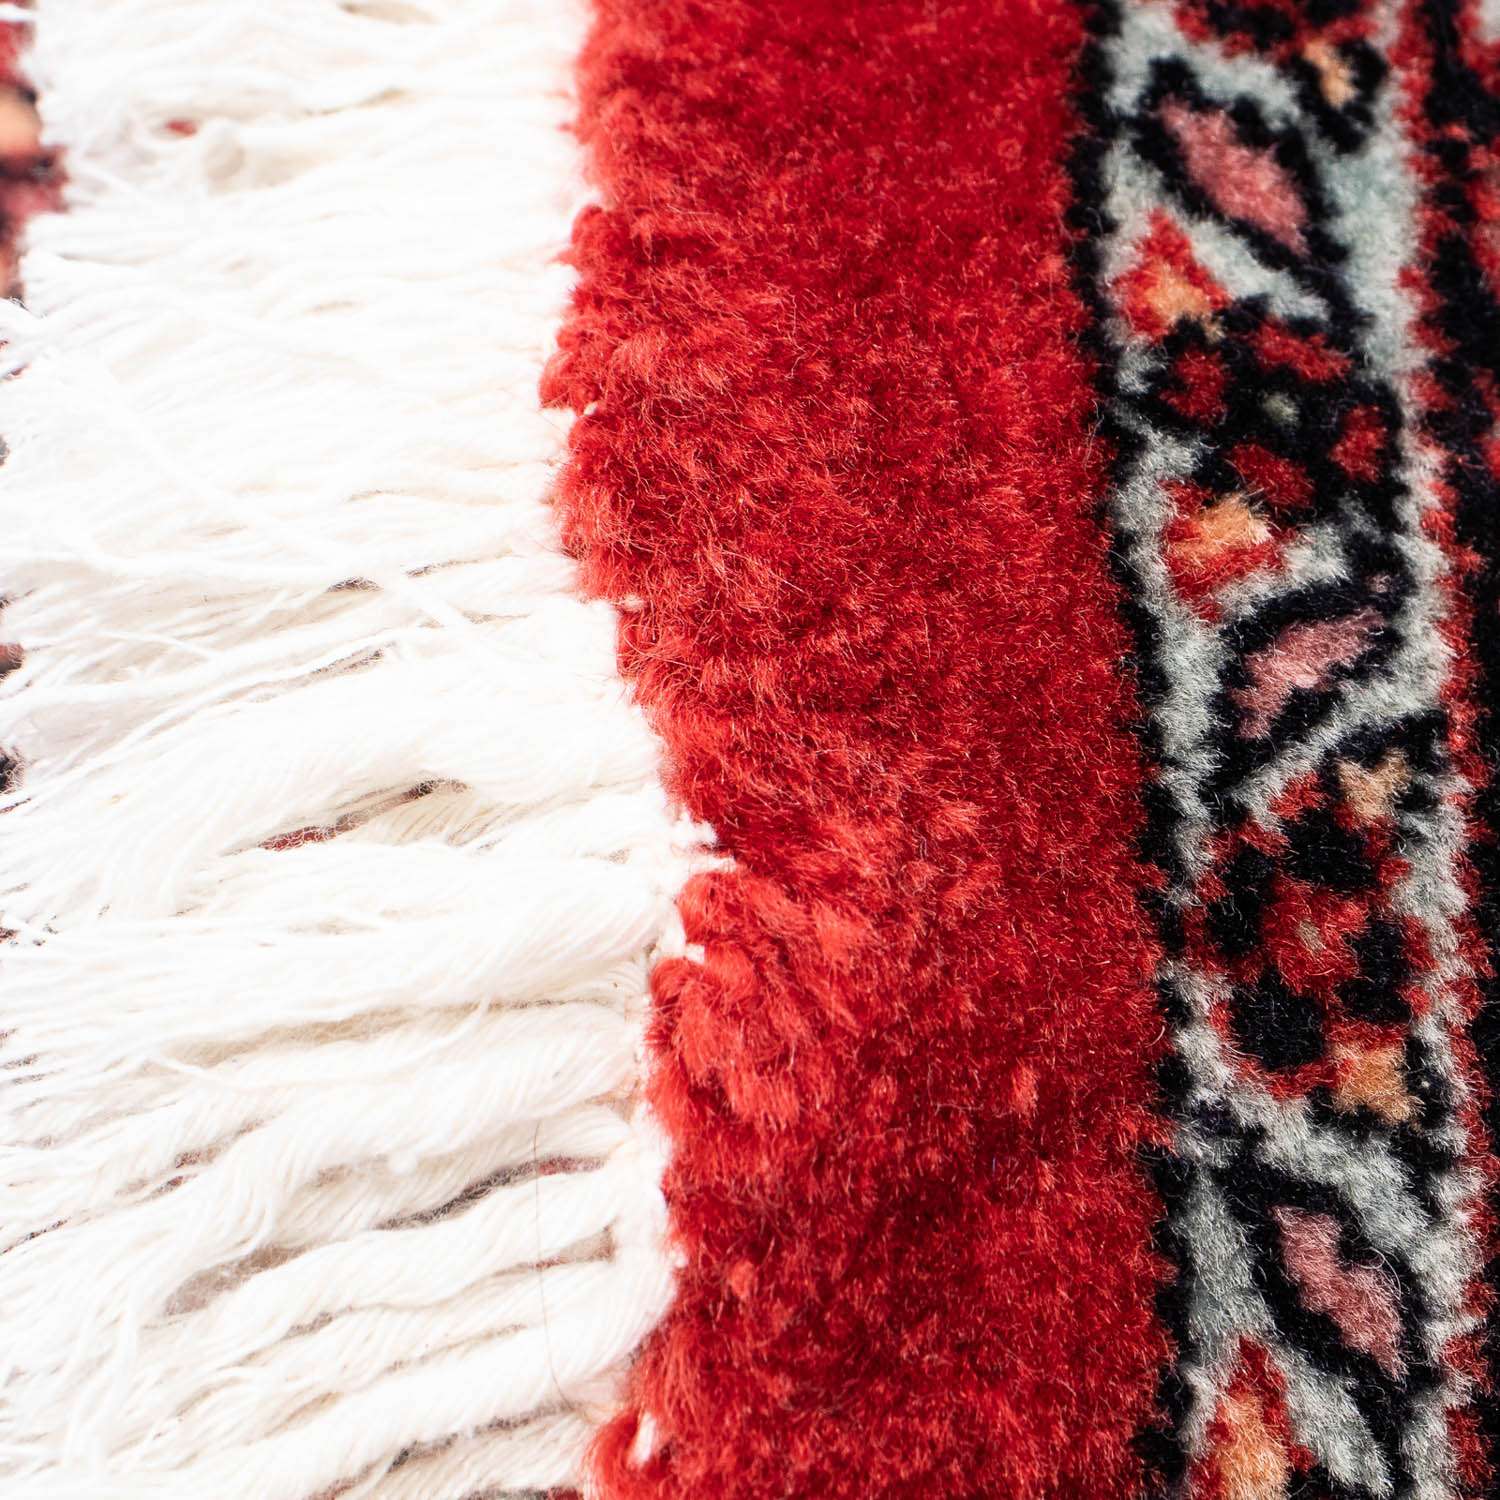 Perský koberec - Bijar kulatý  - 150 x 150 cm - tmavě červená